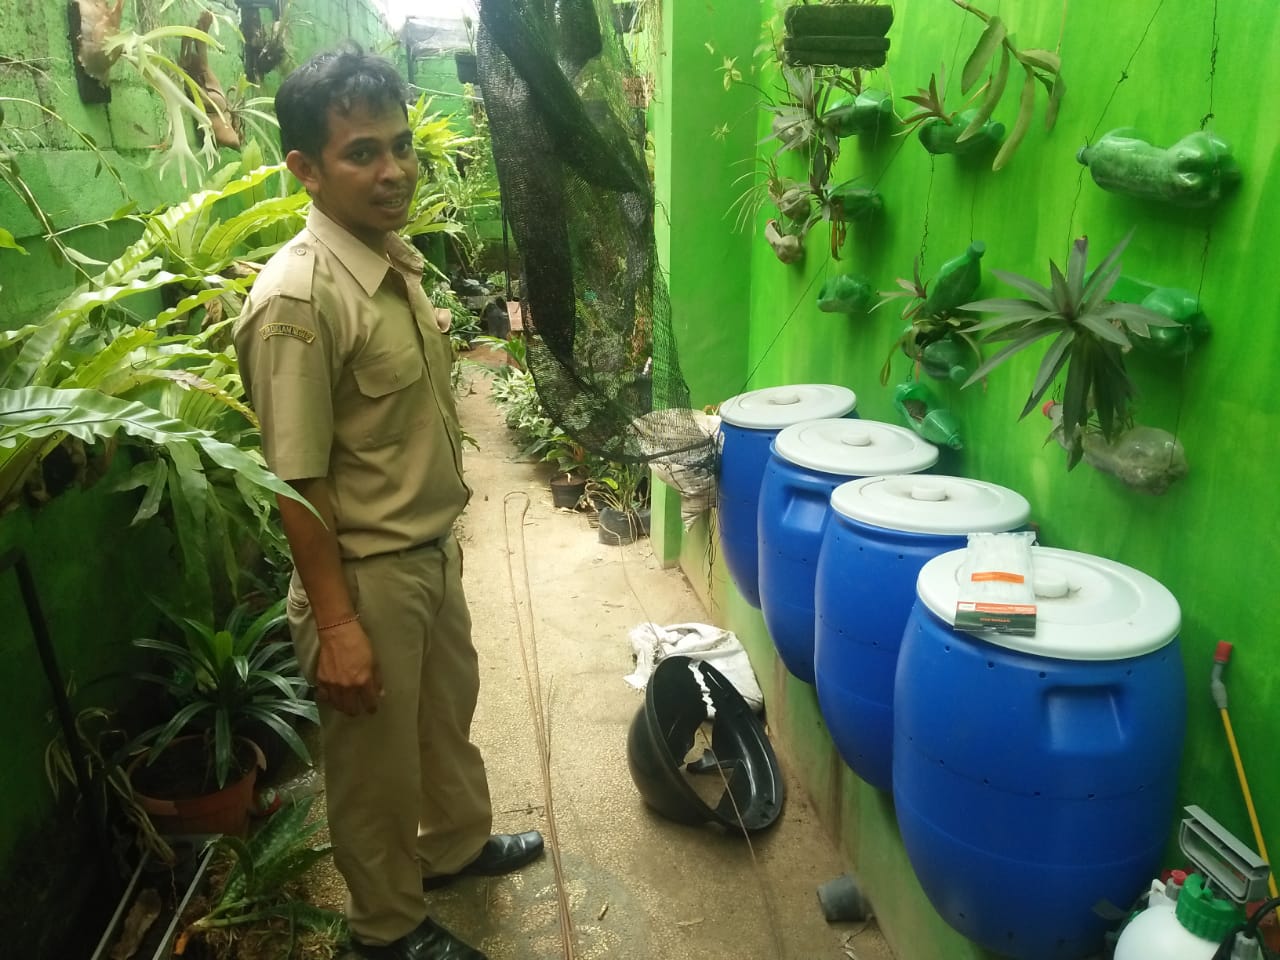 Diet plastik mendorong sekolah panen pupuk karena komposting daun wadah kemasan makanan | Foto: Luh De Suriyani/Mongabay Indonesia